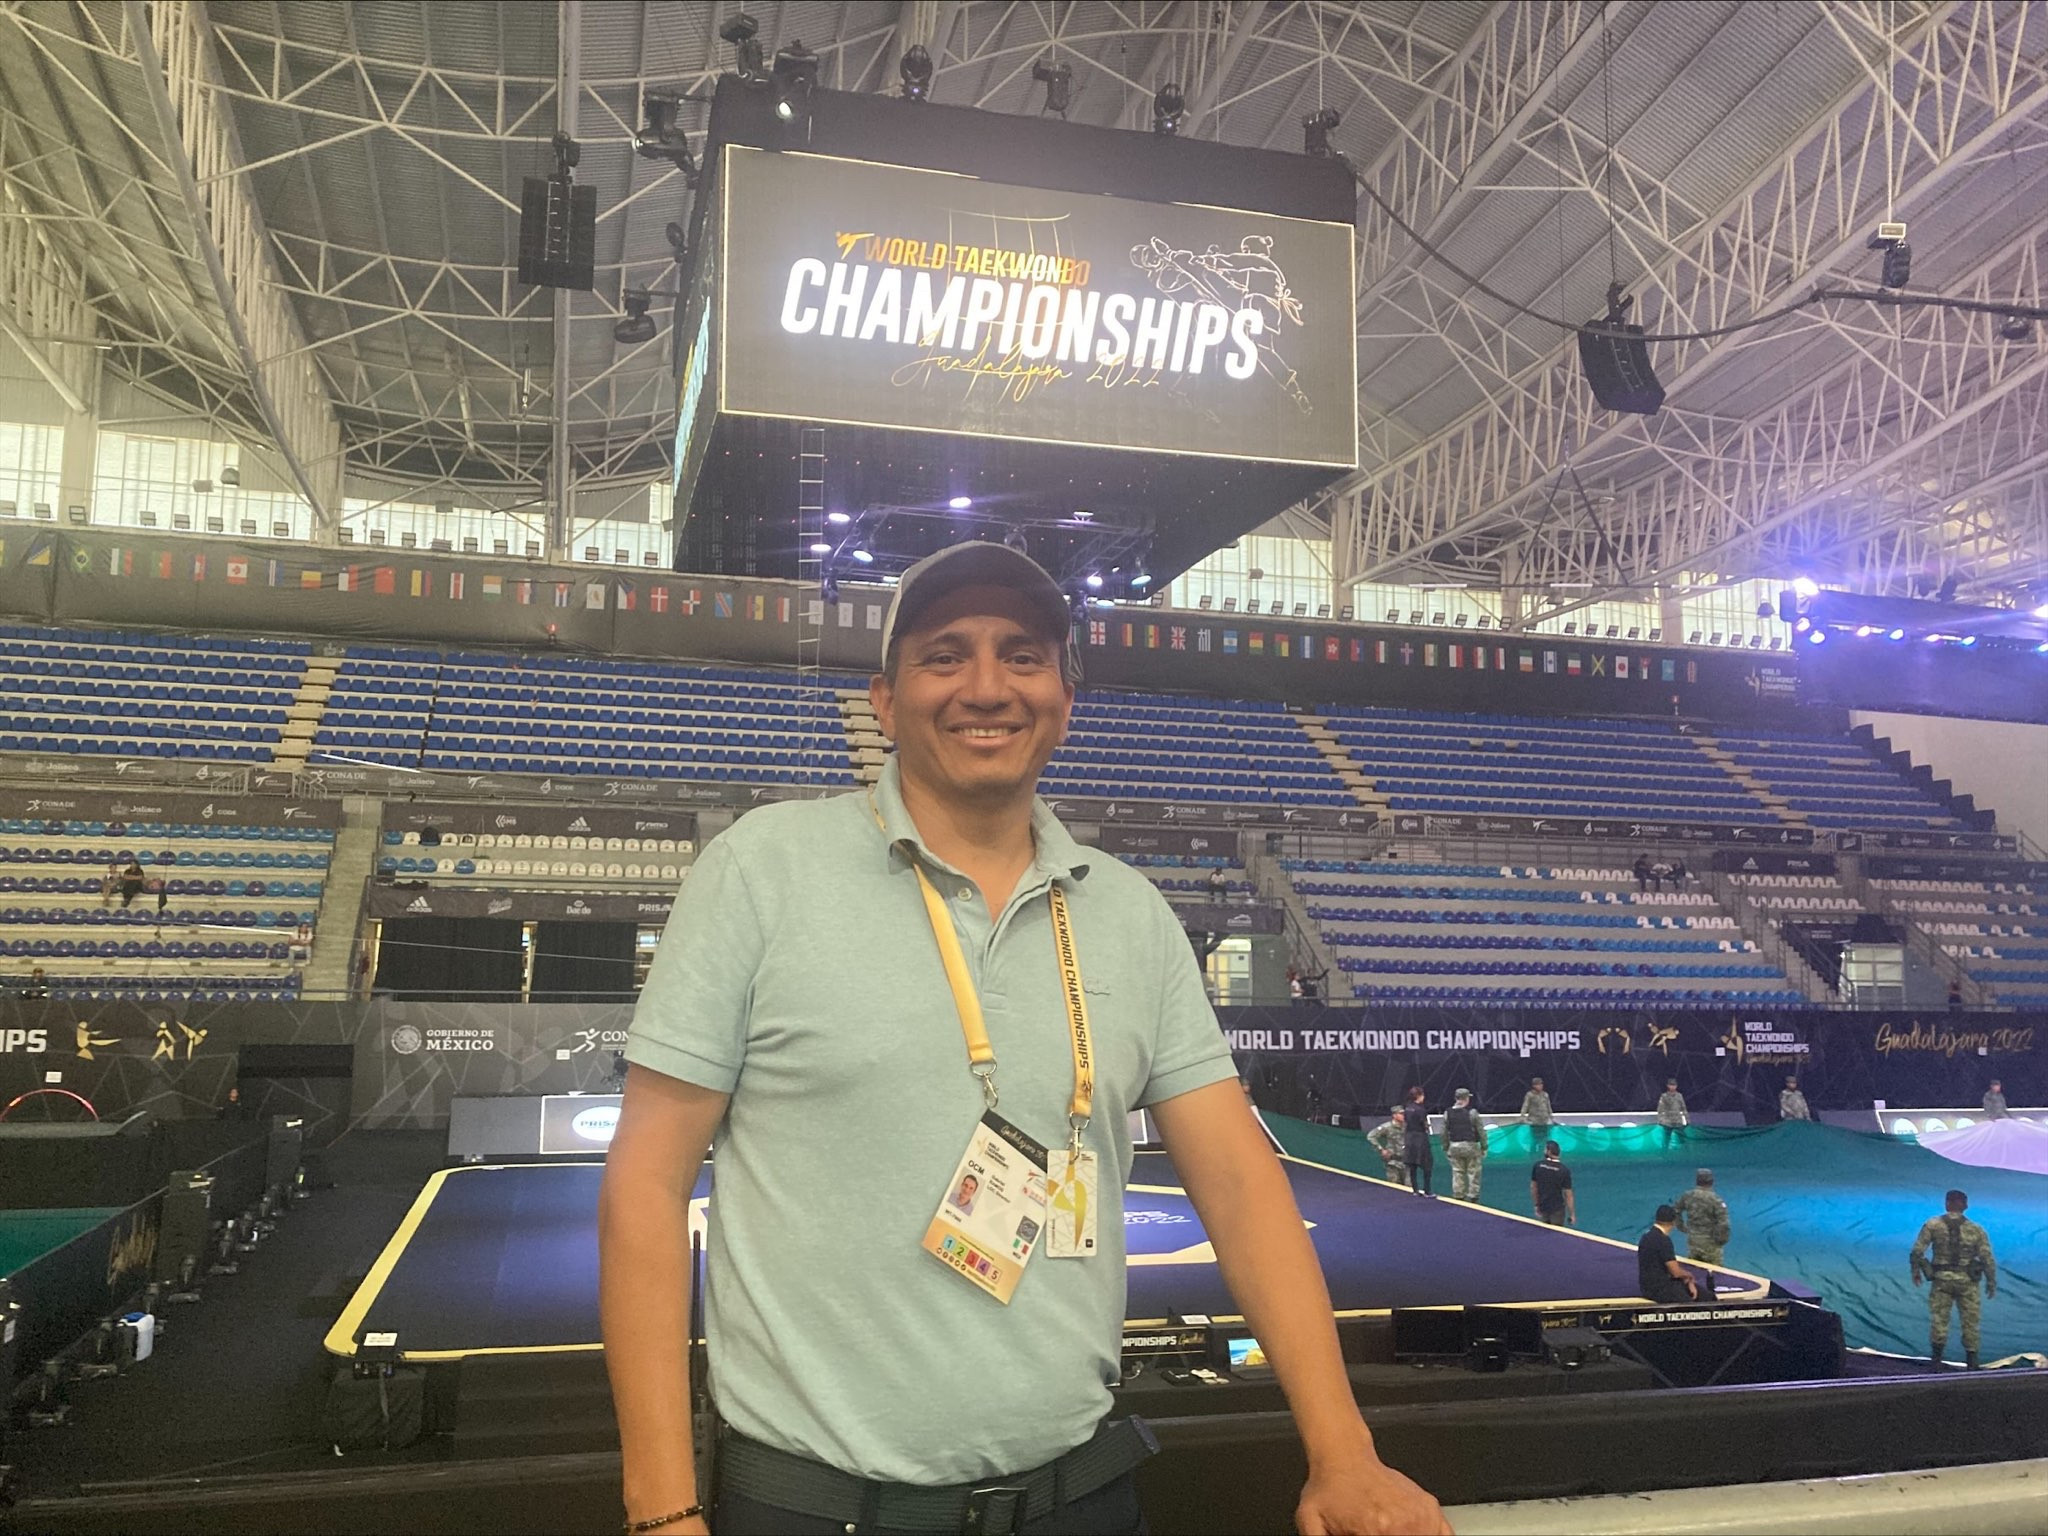 Relocation of World Taekwondo Championships to Guadalajara "made sense", claims event director